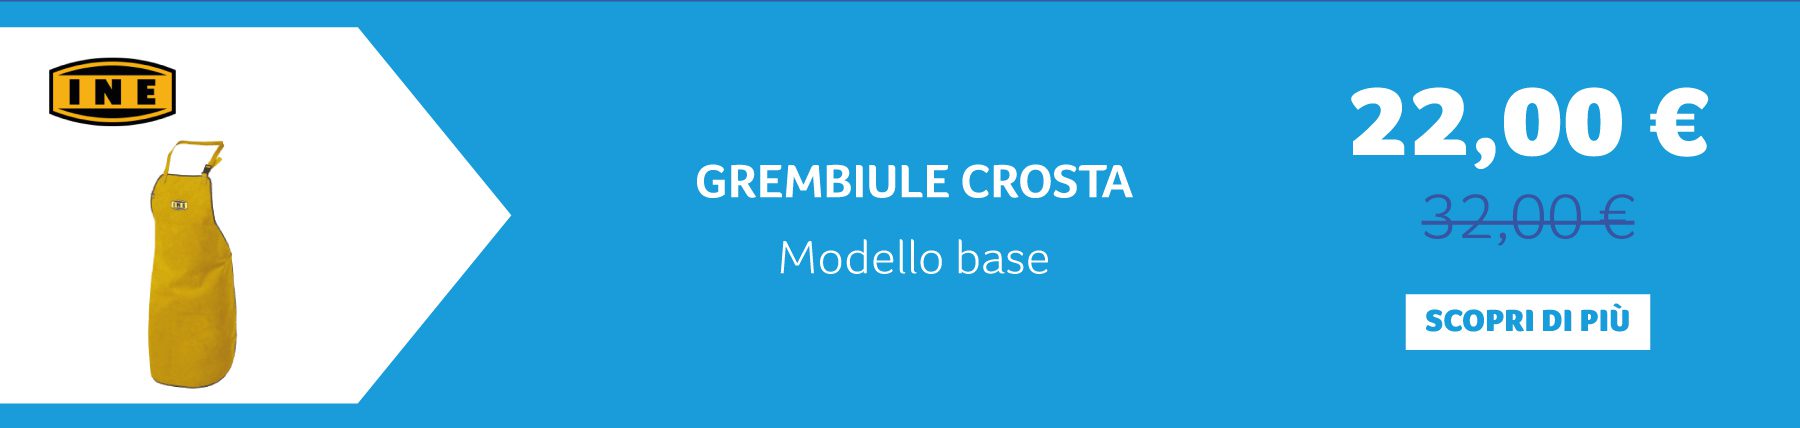 INE - Grembiule CROSTA Modello base.